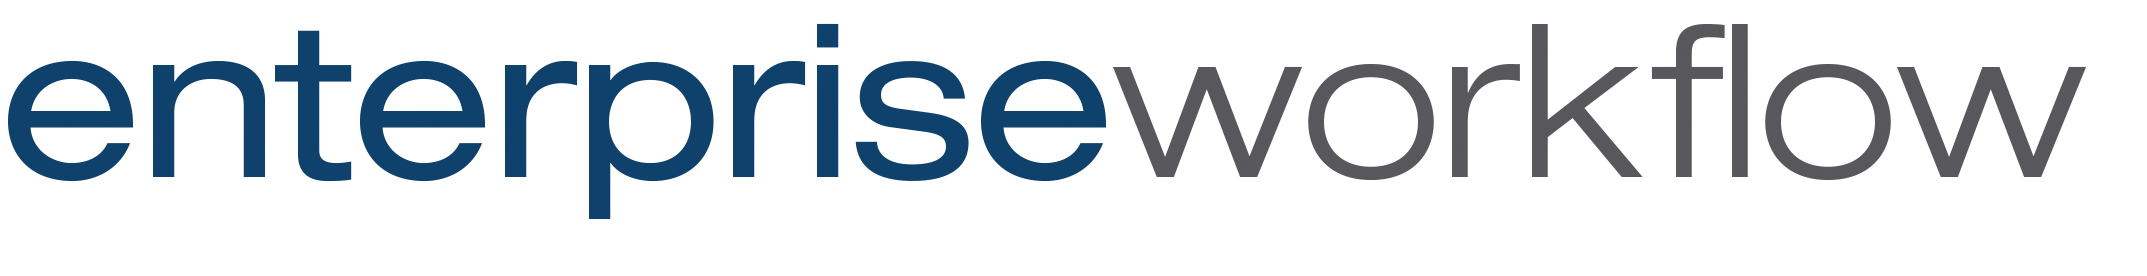 Enterprise Workflow Logo